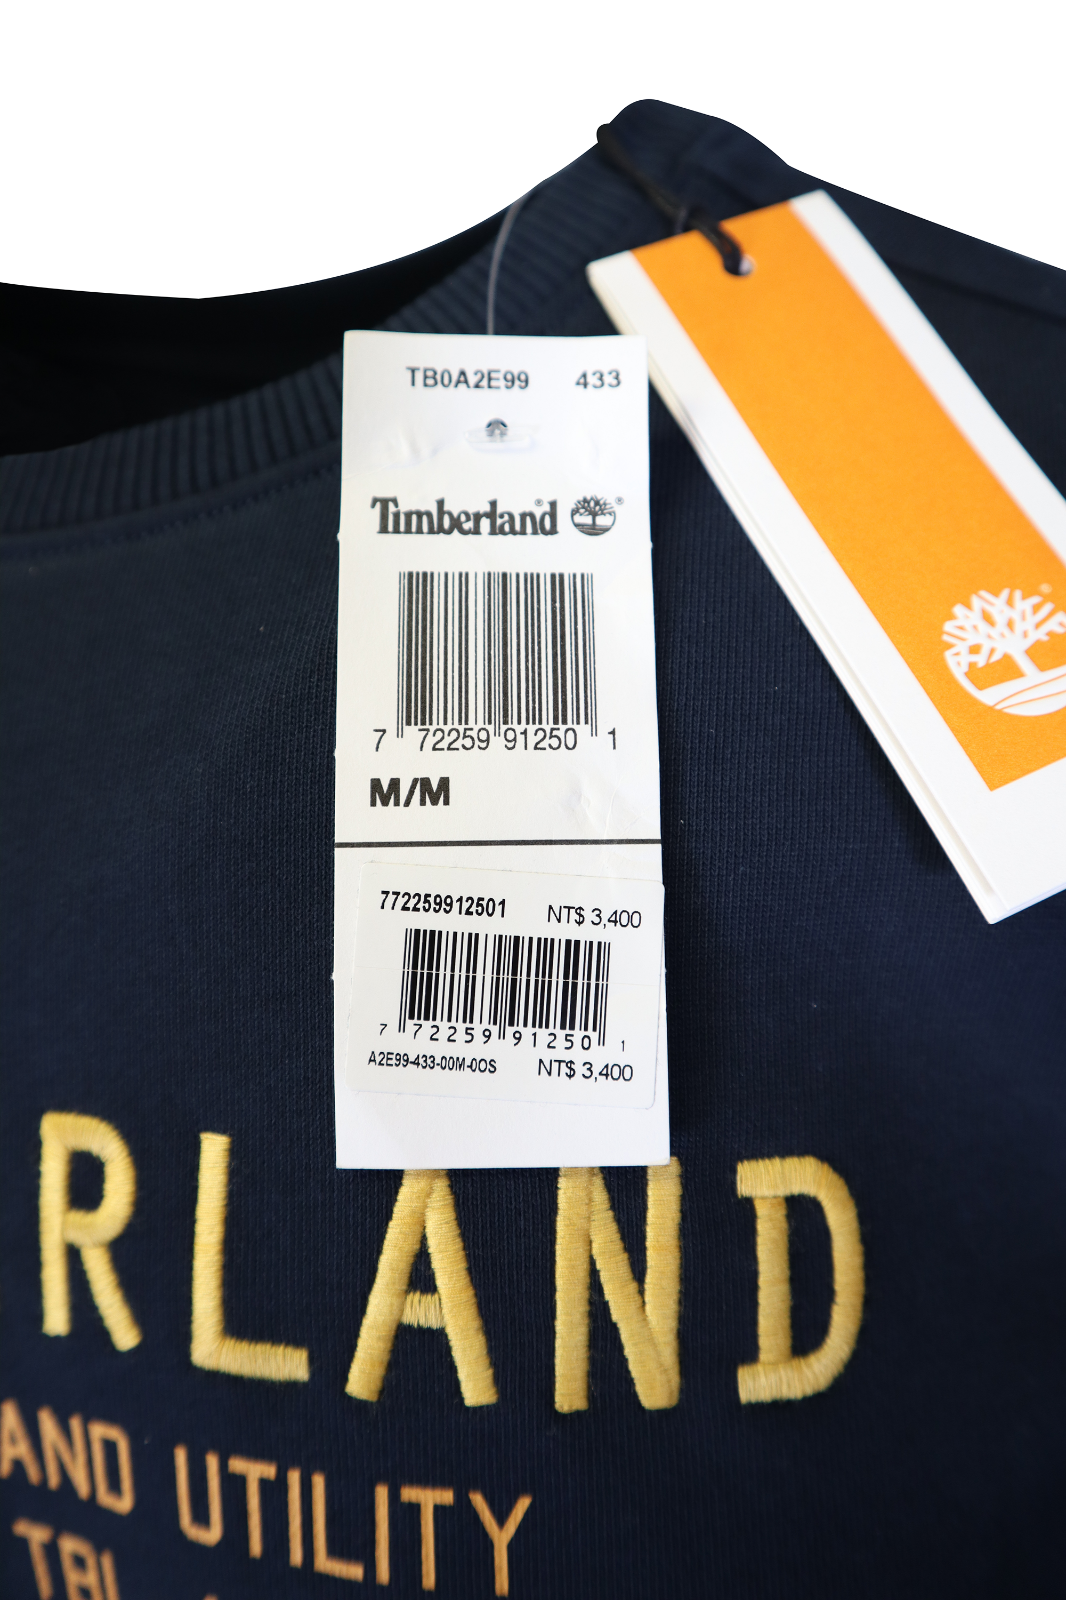 Timberland Men's Sweatshirt Navy New England Utility L/S Sweatshirt (S04)